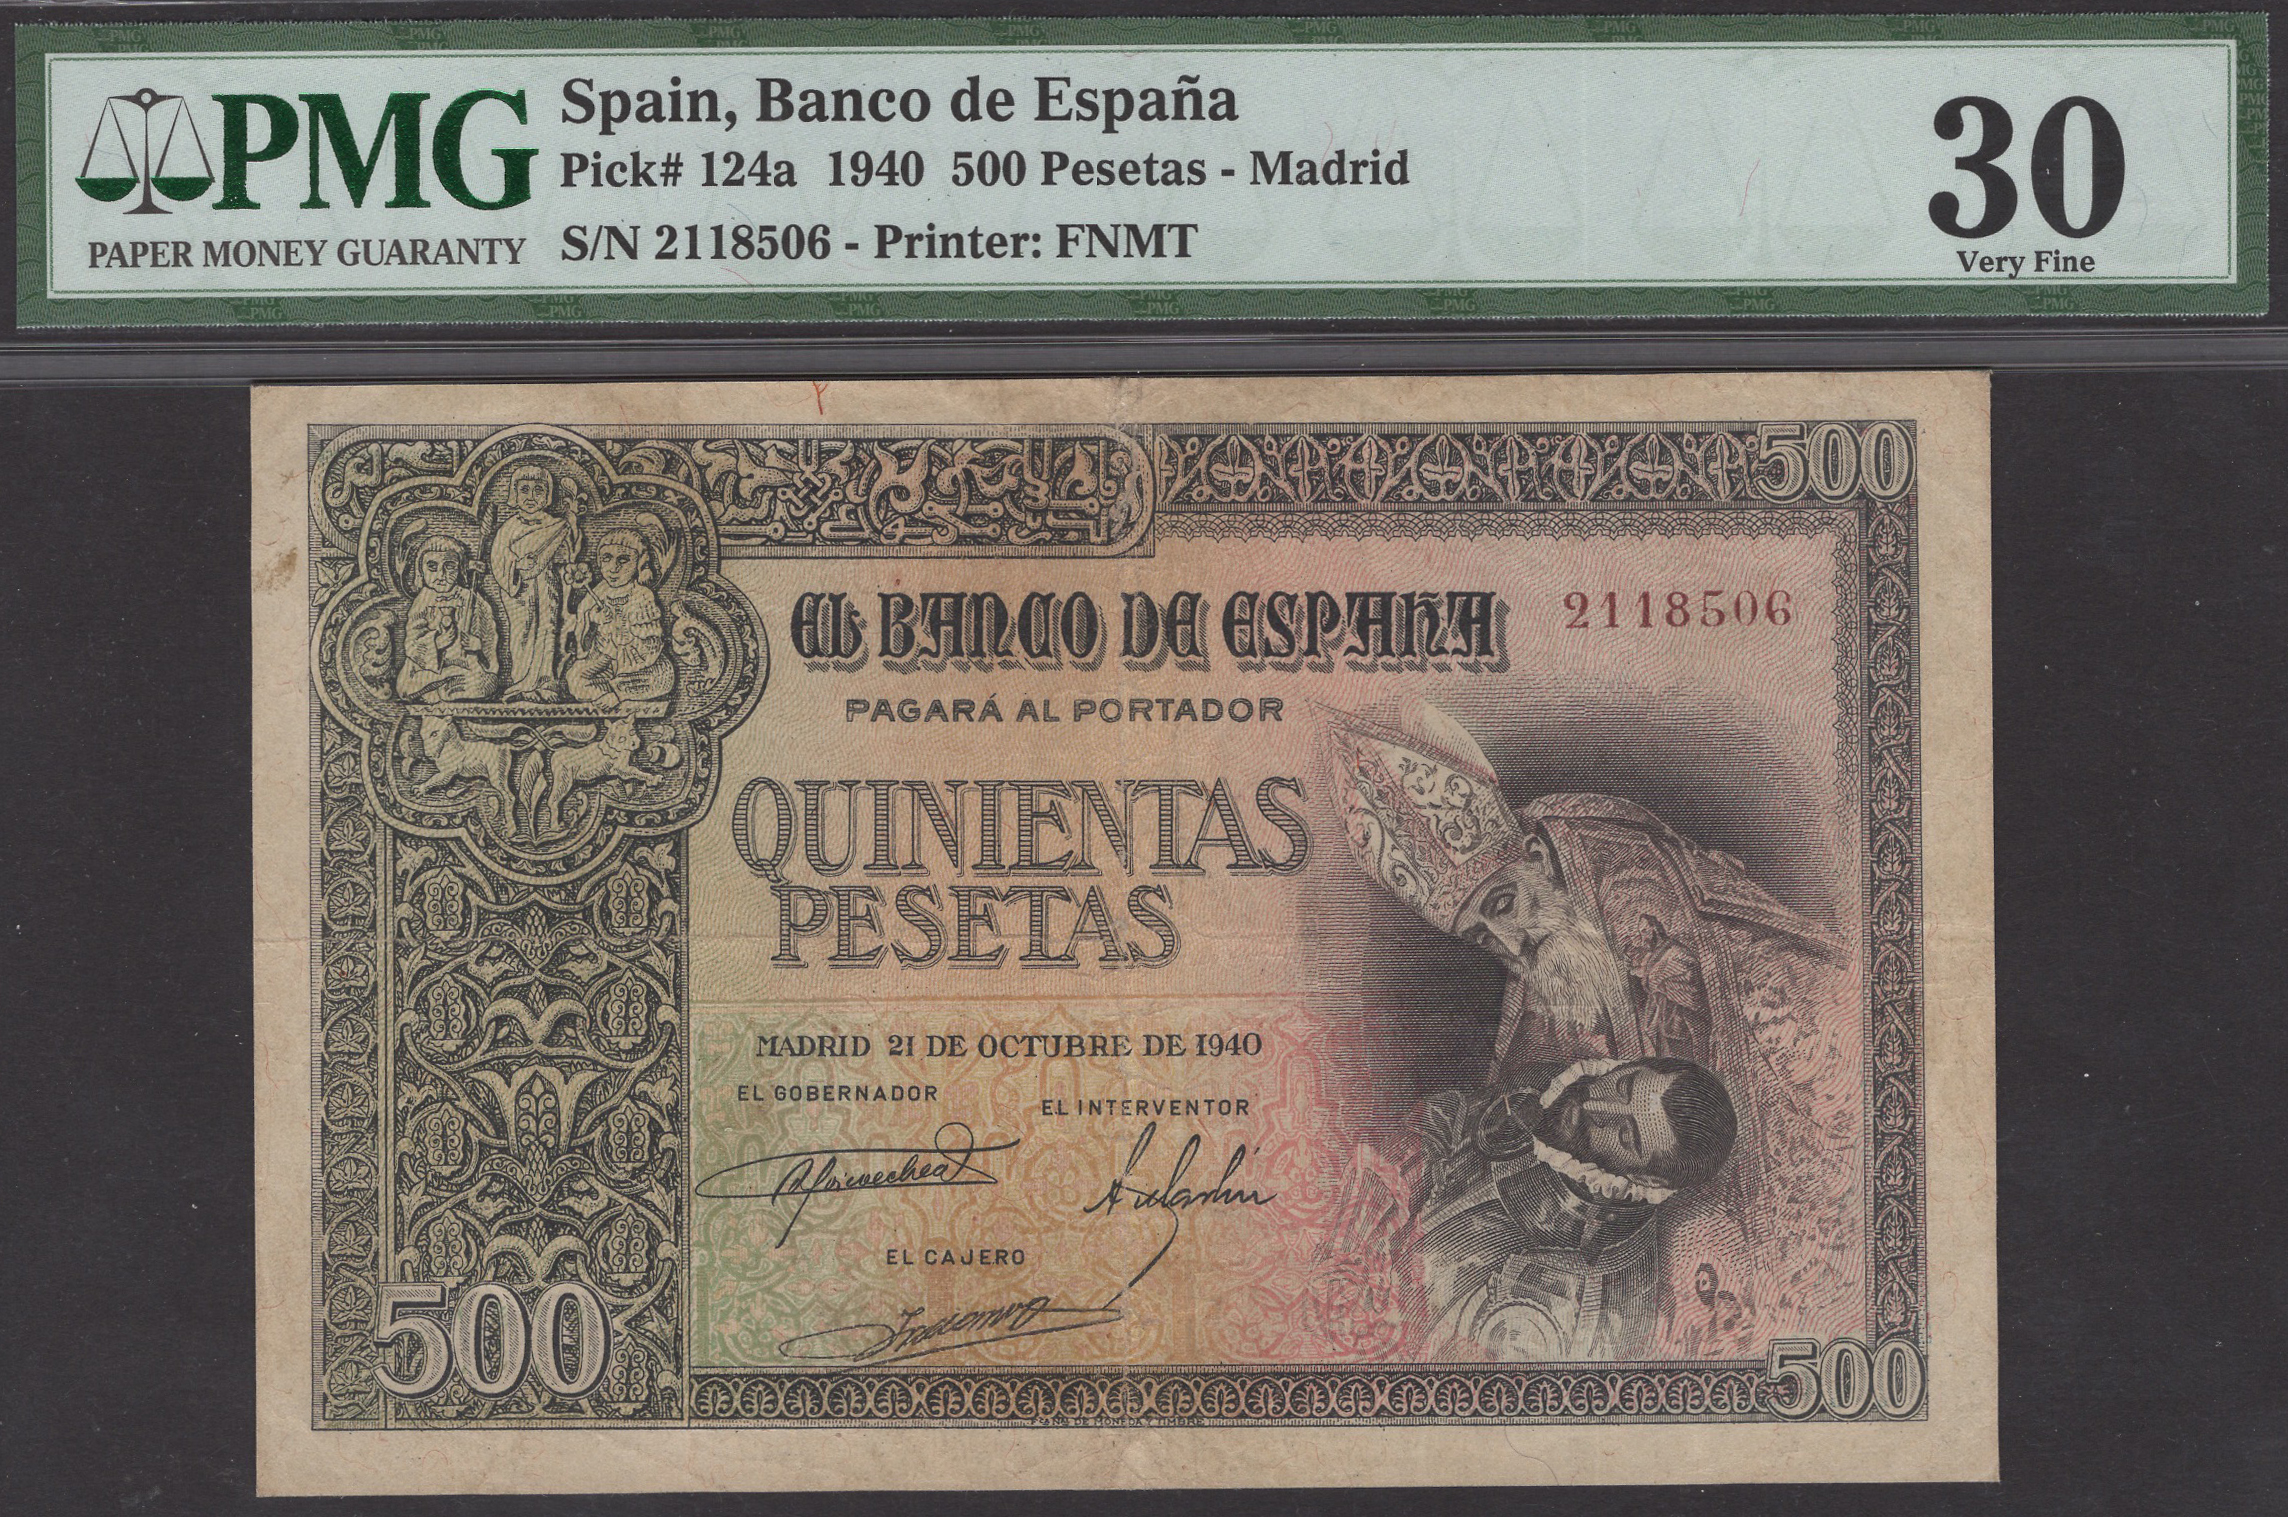 Banco de Espana, 500 Pesetas, 21 October 1940, serial number 2118506, in PMG holder 30,...